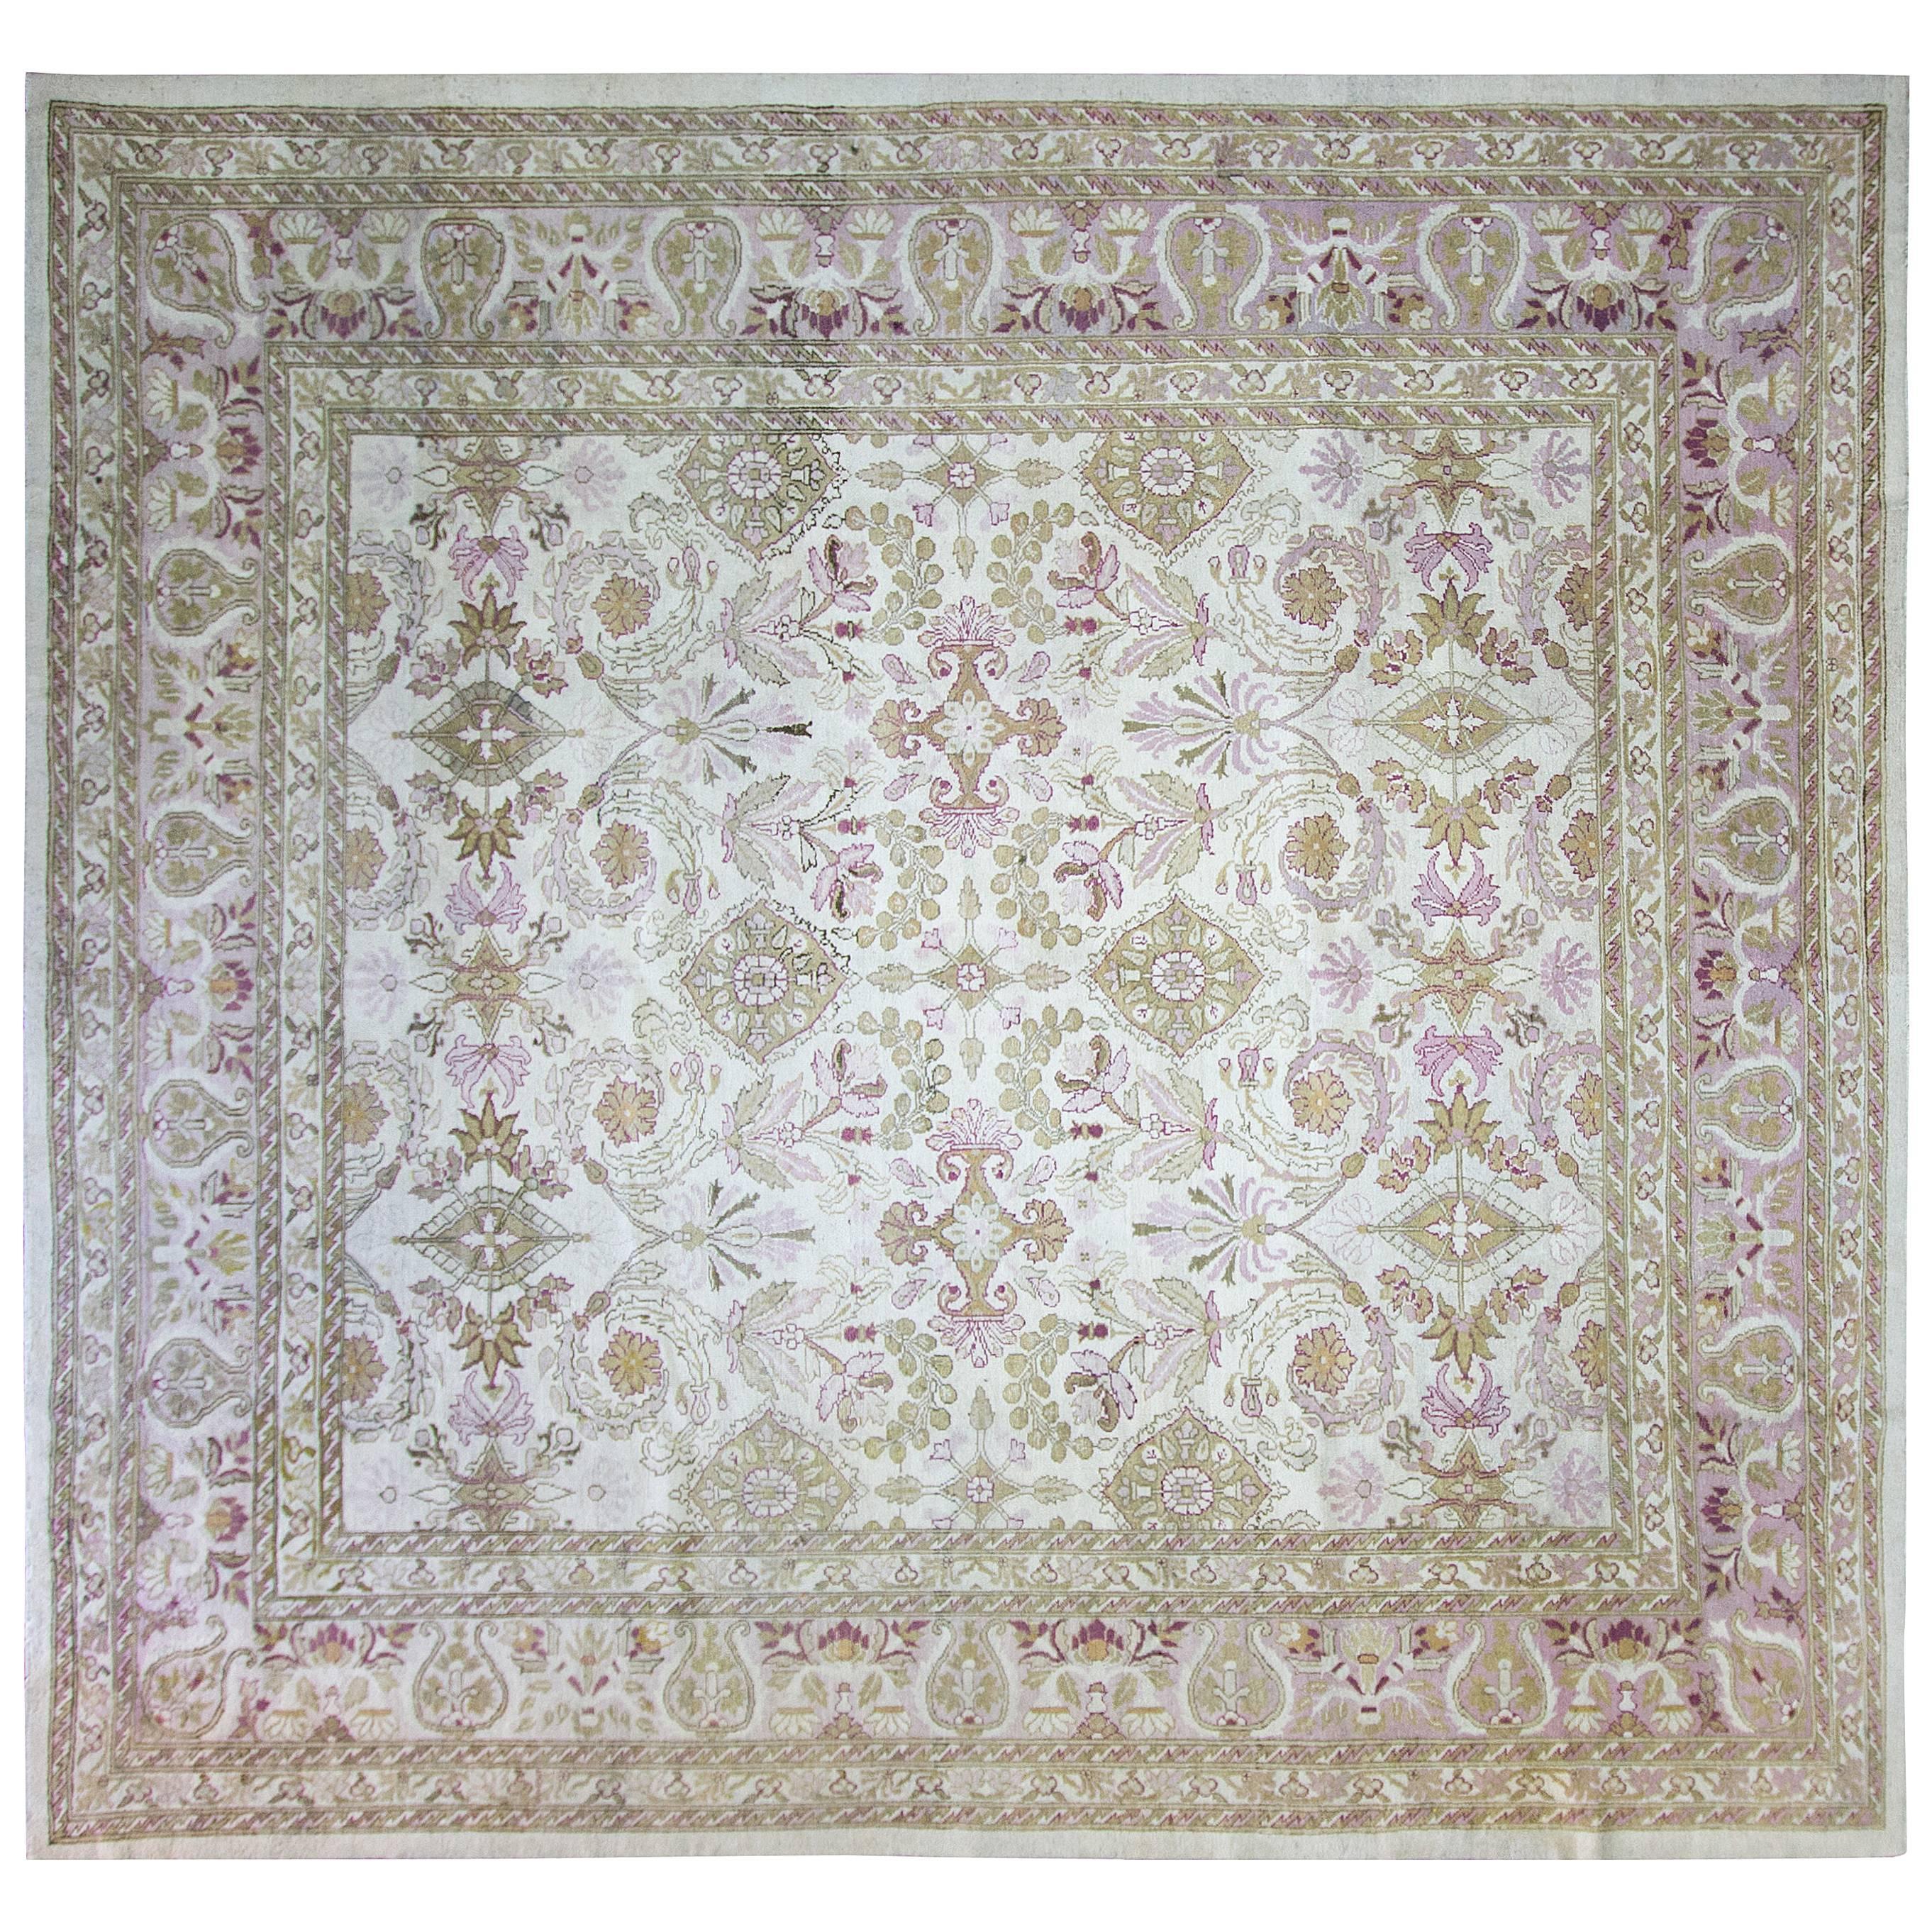 Antique Amritsar Agra Carpet For Sale